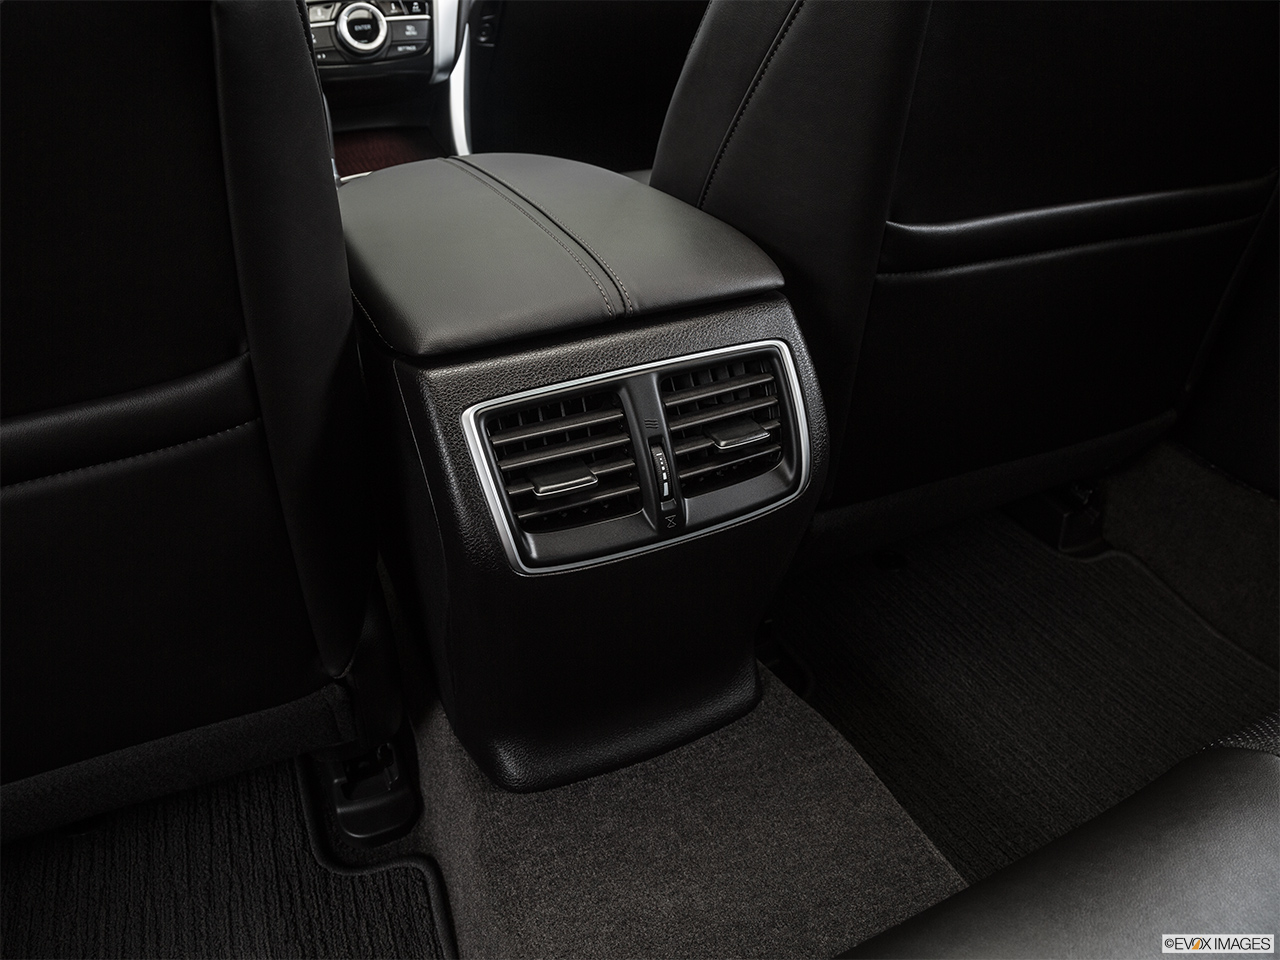 2015 Acura TLX 2.4 8-DCP P-AWS Rear A/C controls. 